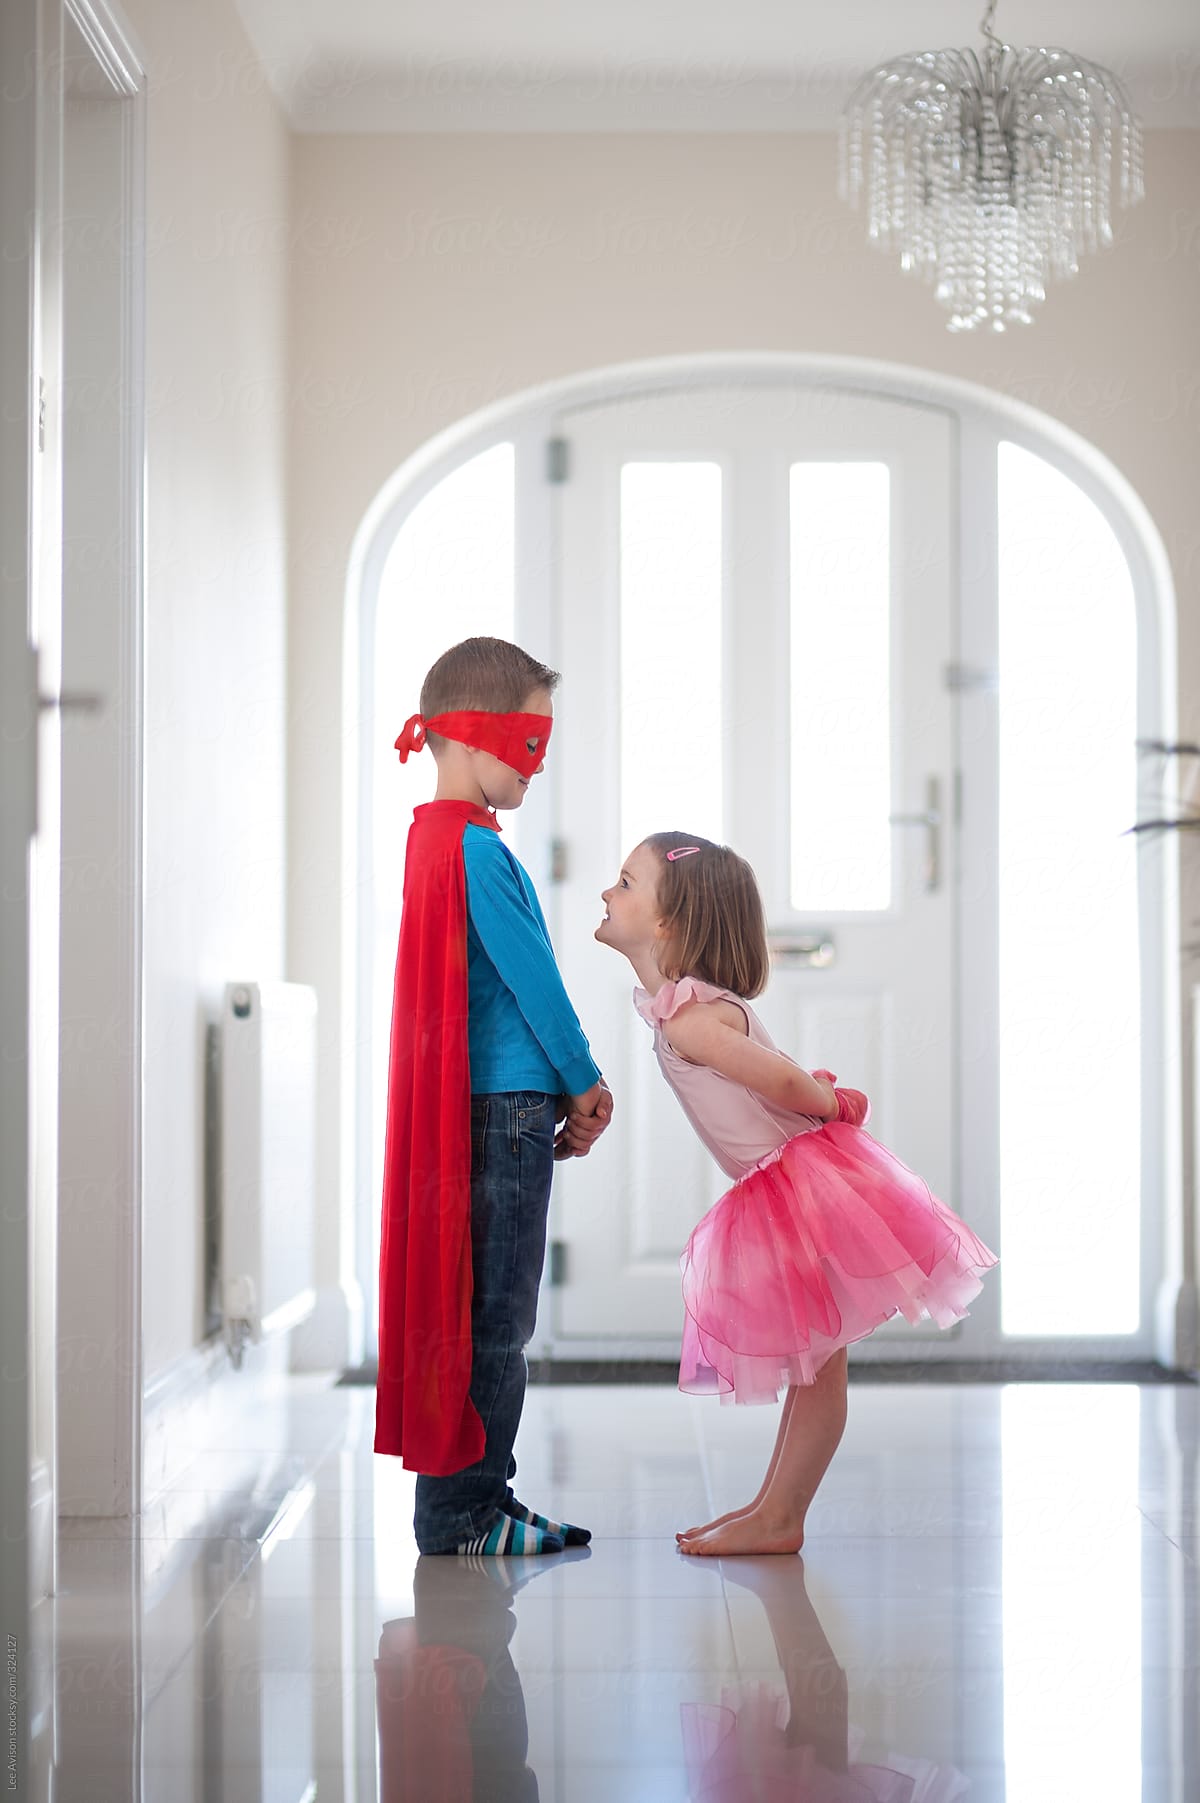 children dressing up and playing superhero and ballerina